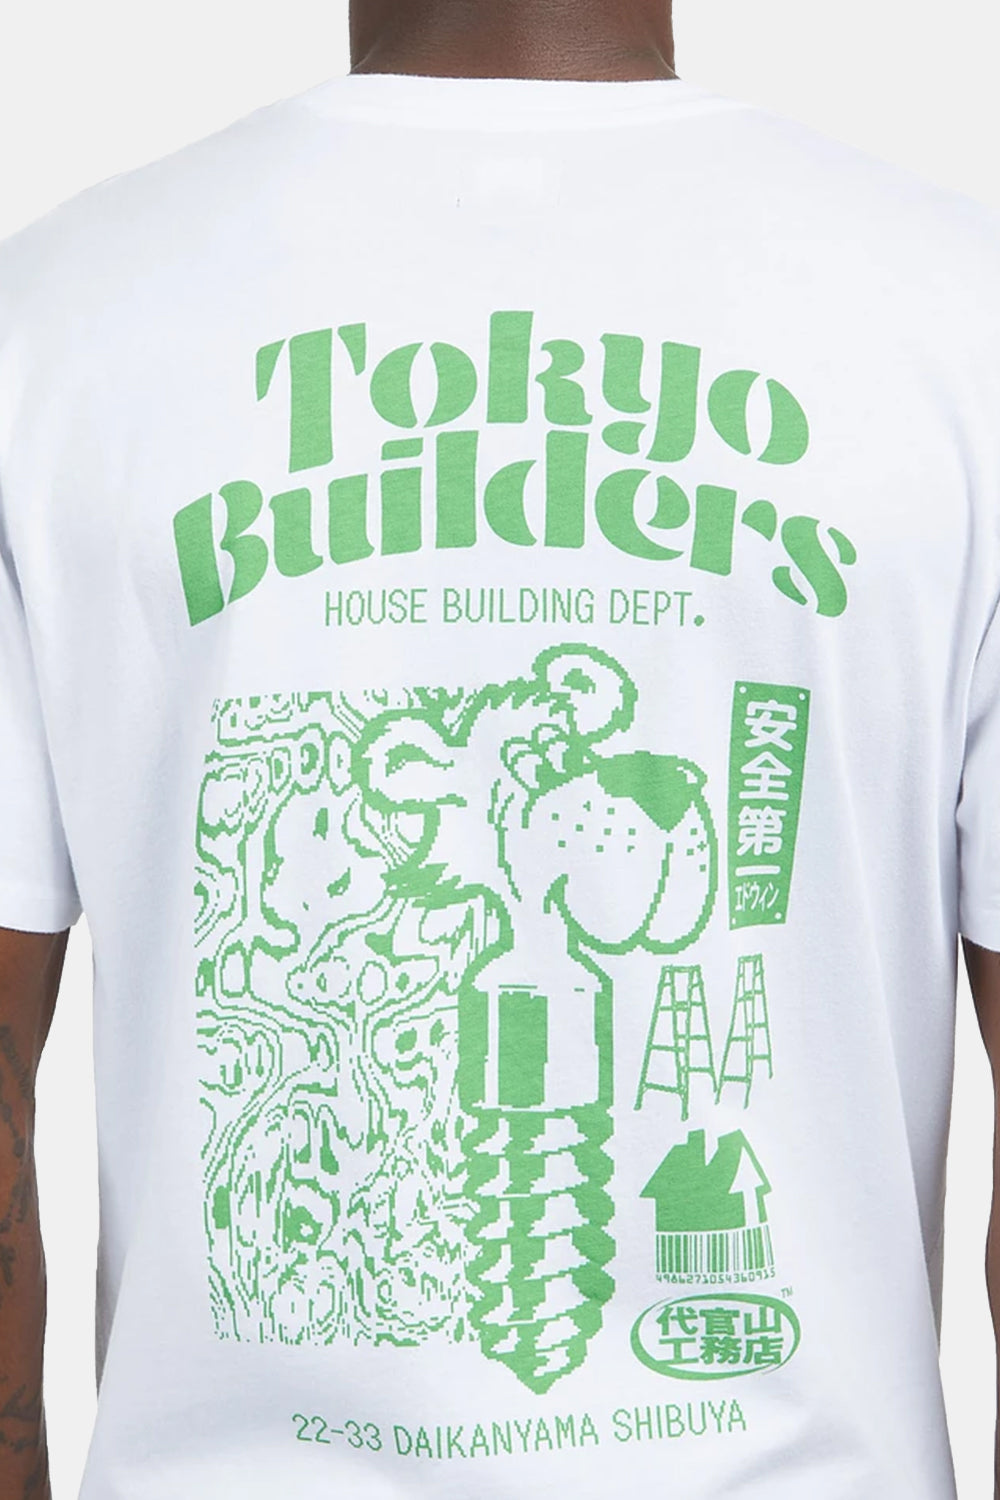 Edwin Tokyo Builders T-Shirt (White Garment Wash)